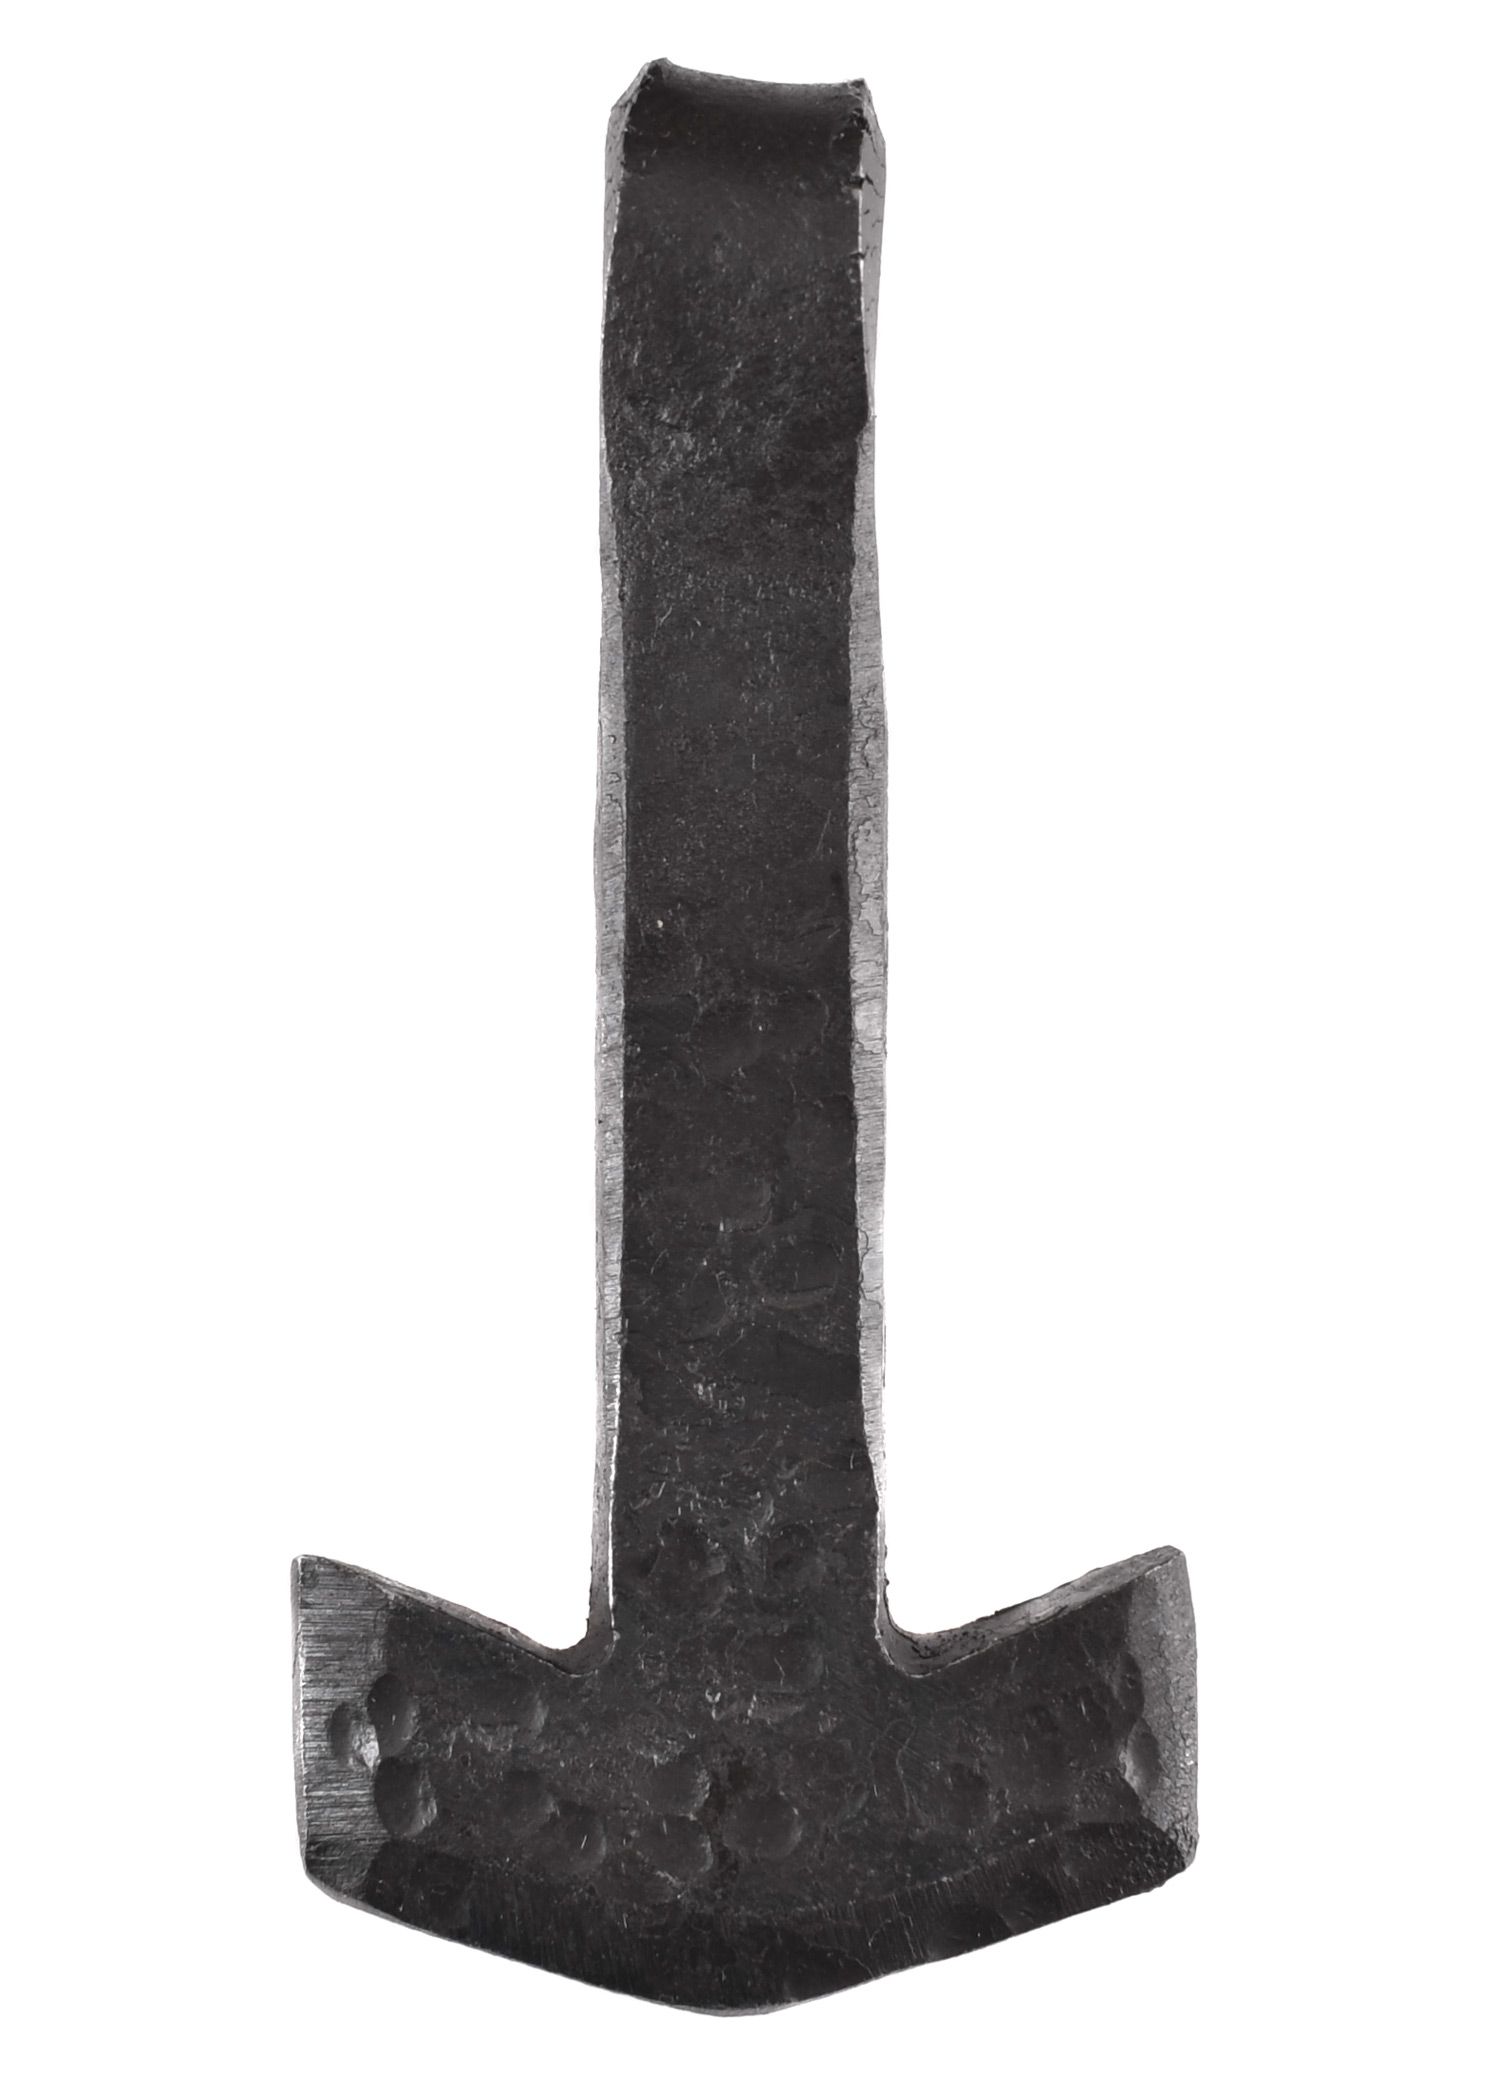 Mjölnir - Thorshammer aus Eisen, handgeschmiedet